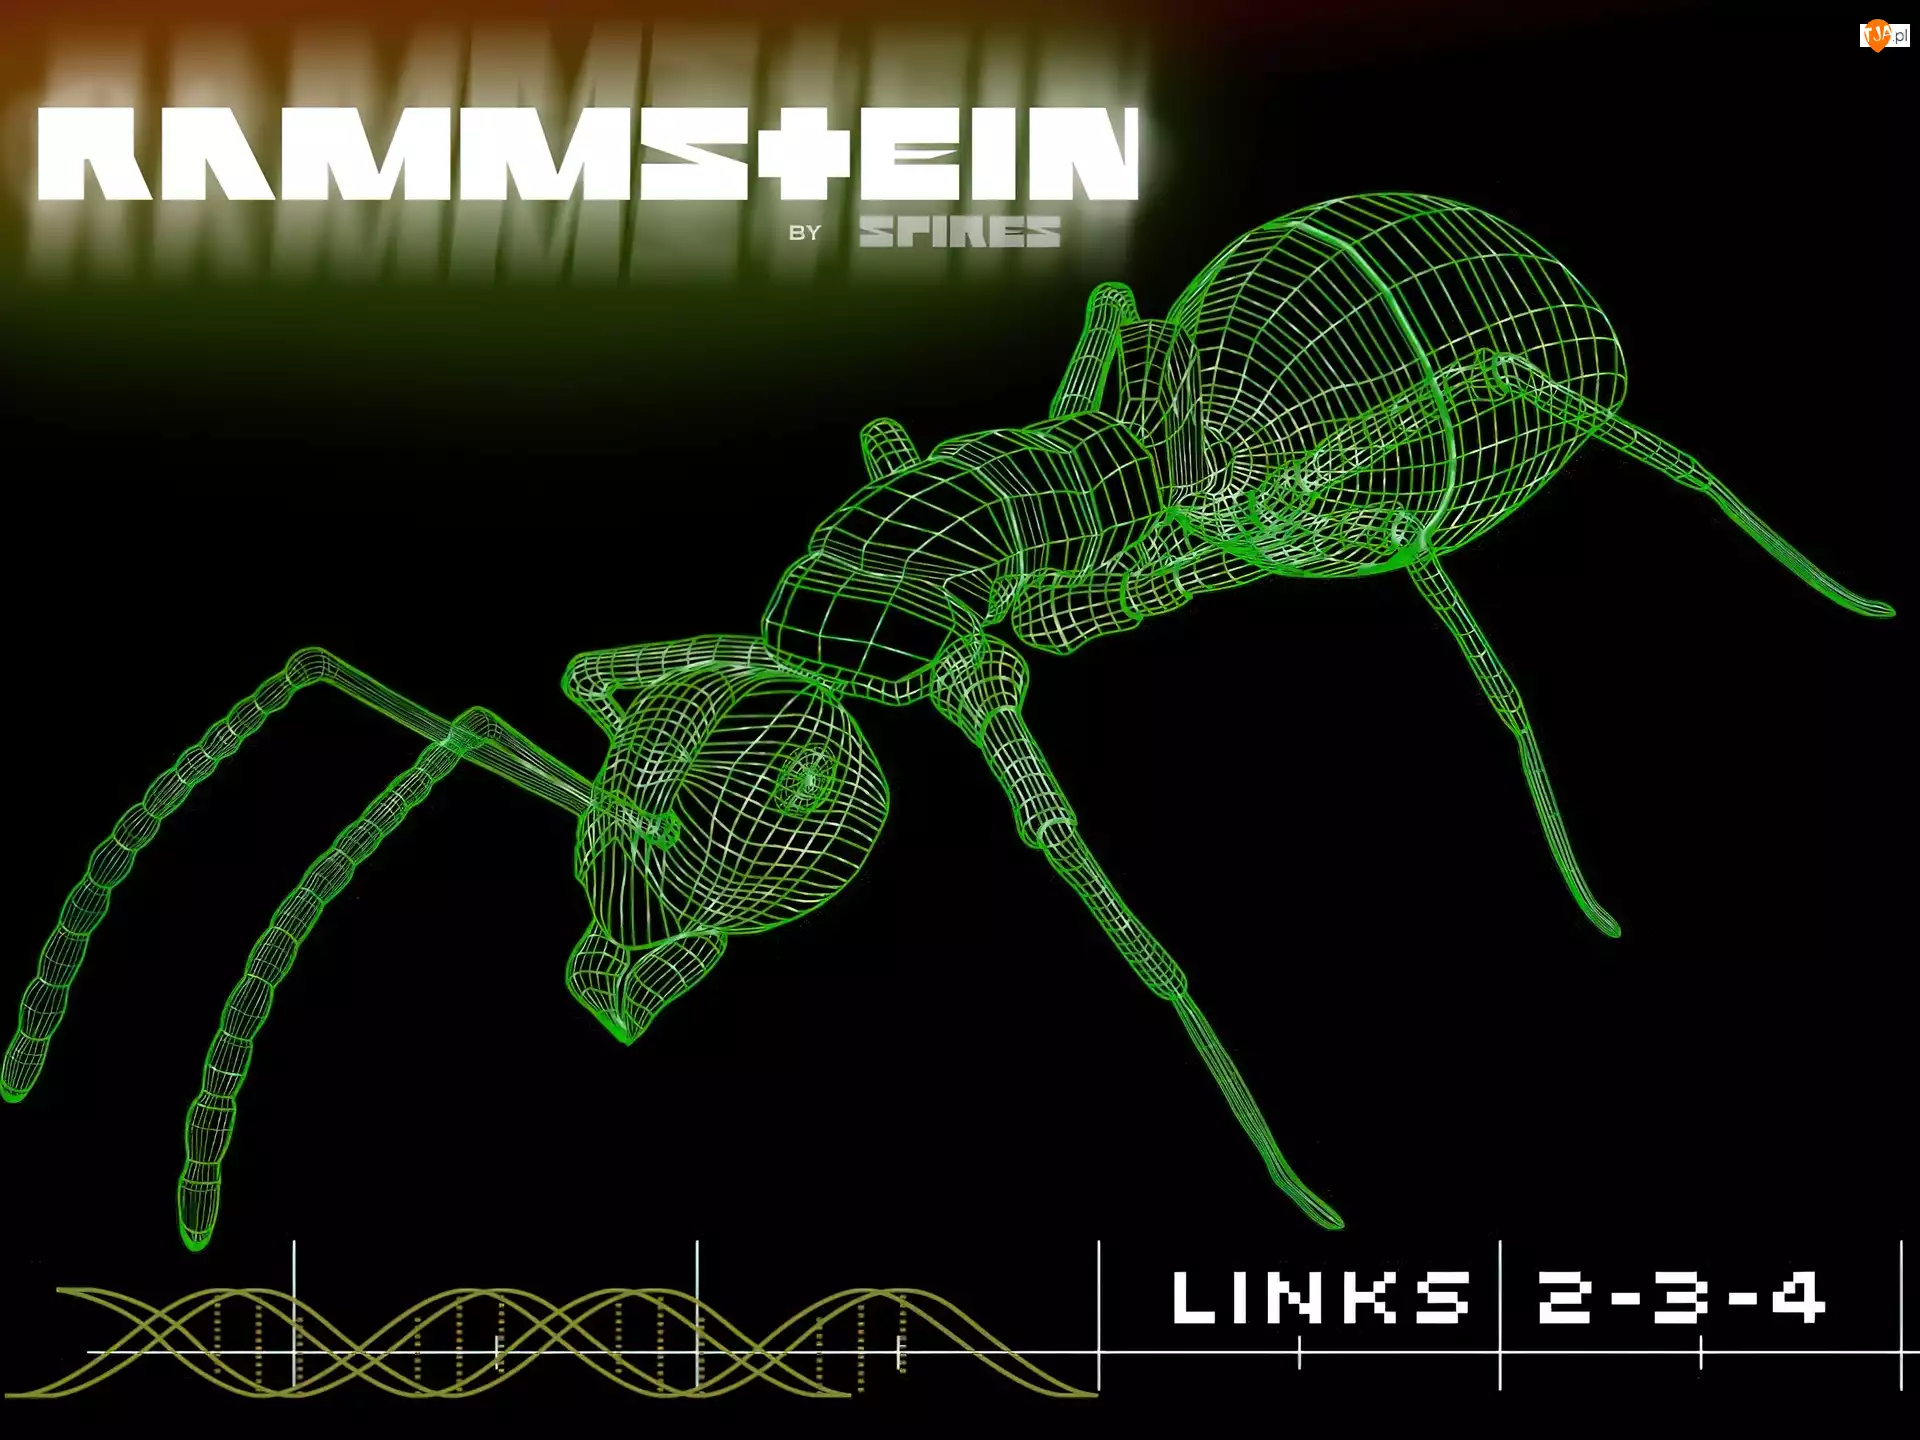 Rammstein, mrówka